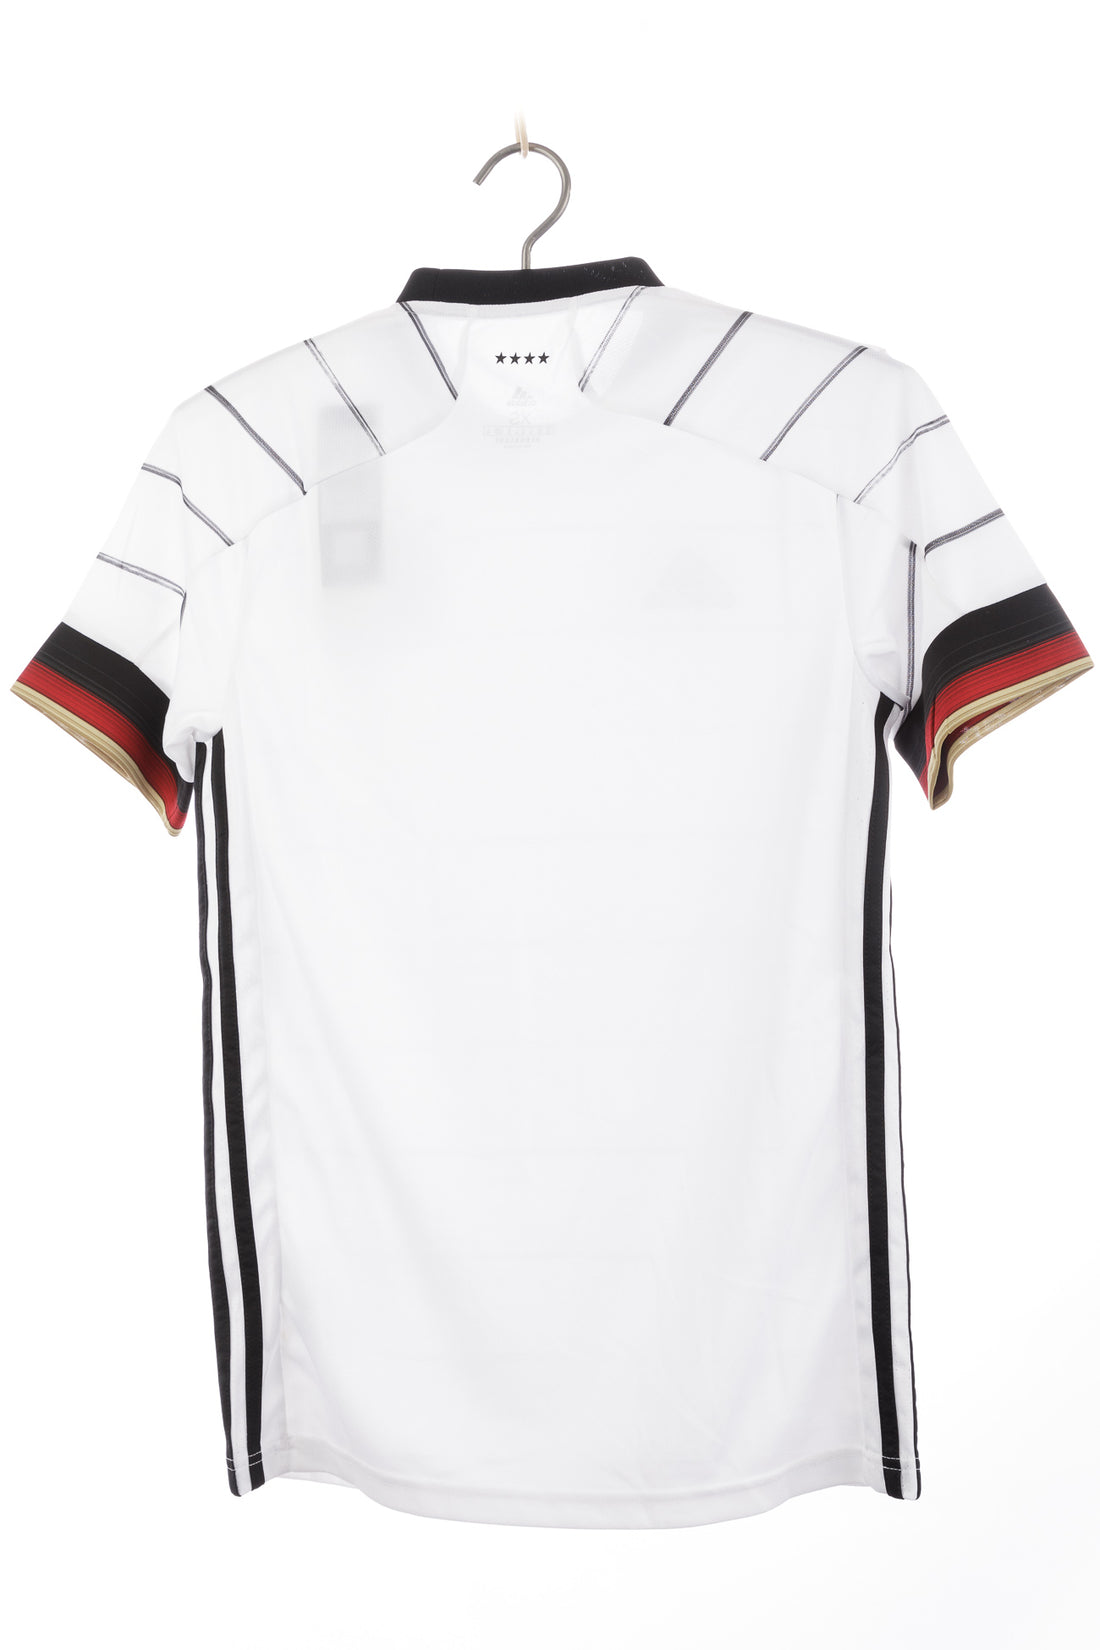 Germany 2020 - 2021 Home Football Shirt